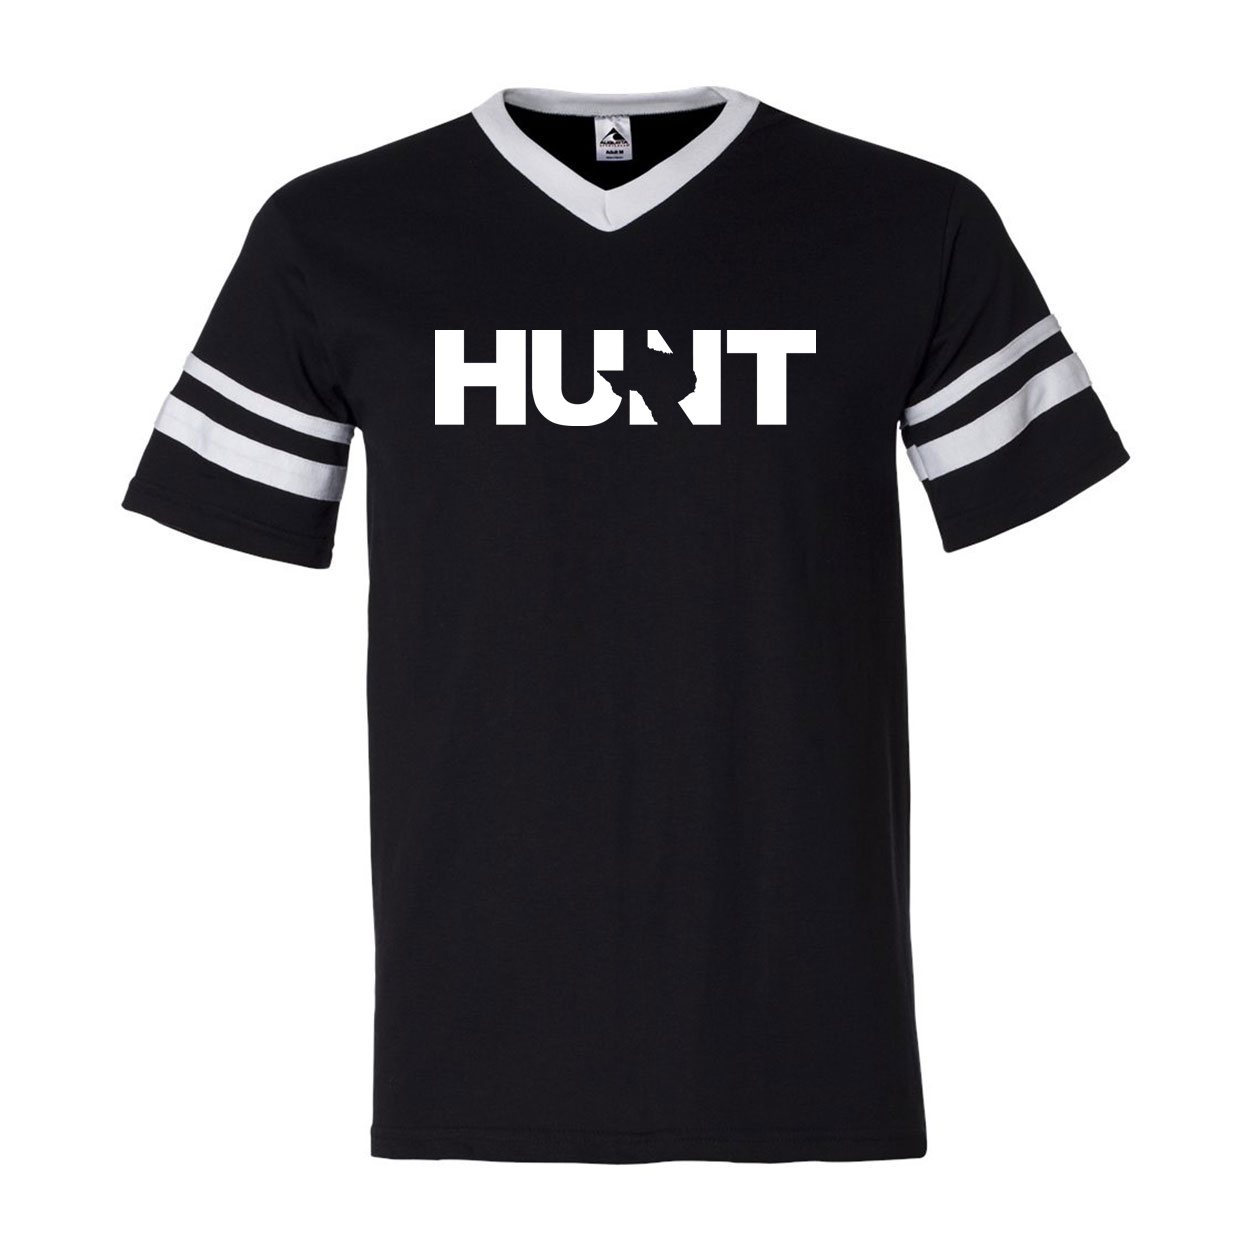 Hunt Texas Classic Premium Striped Jersey T-Shirt Black/White (White Logo)